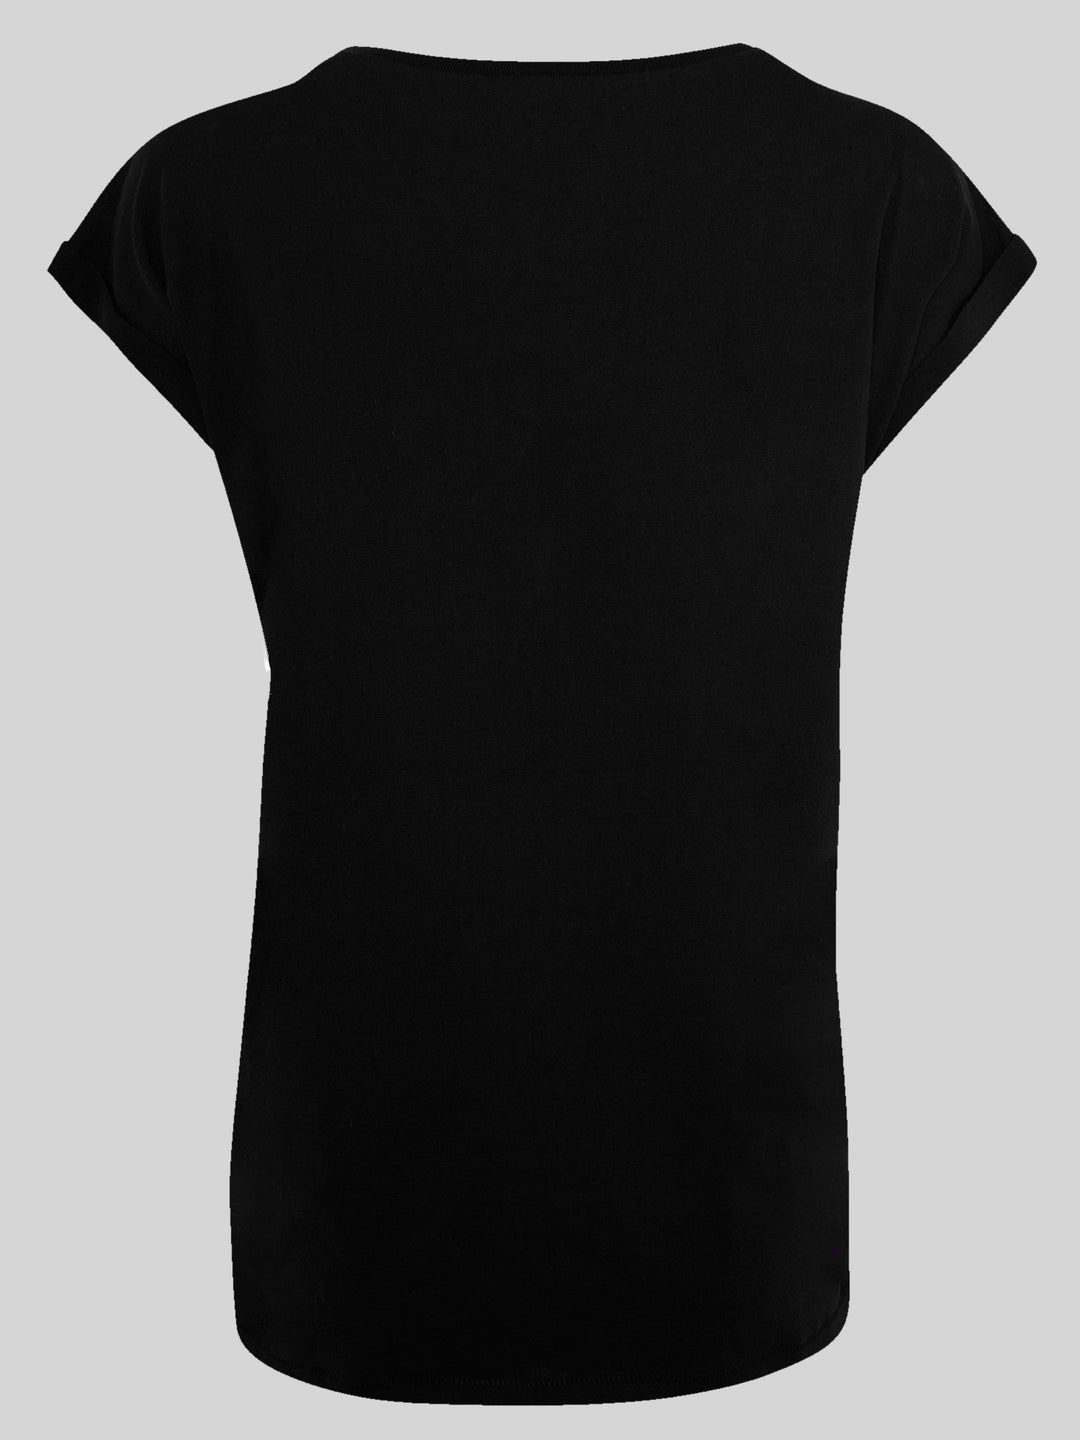 Pink Floyd T-Shirt | Miro 70s Prism | Premium Short Sleeve Ladies Tee –  F4NT4STIC